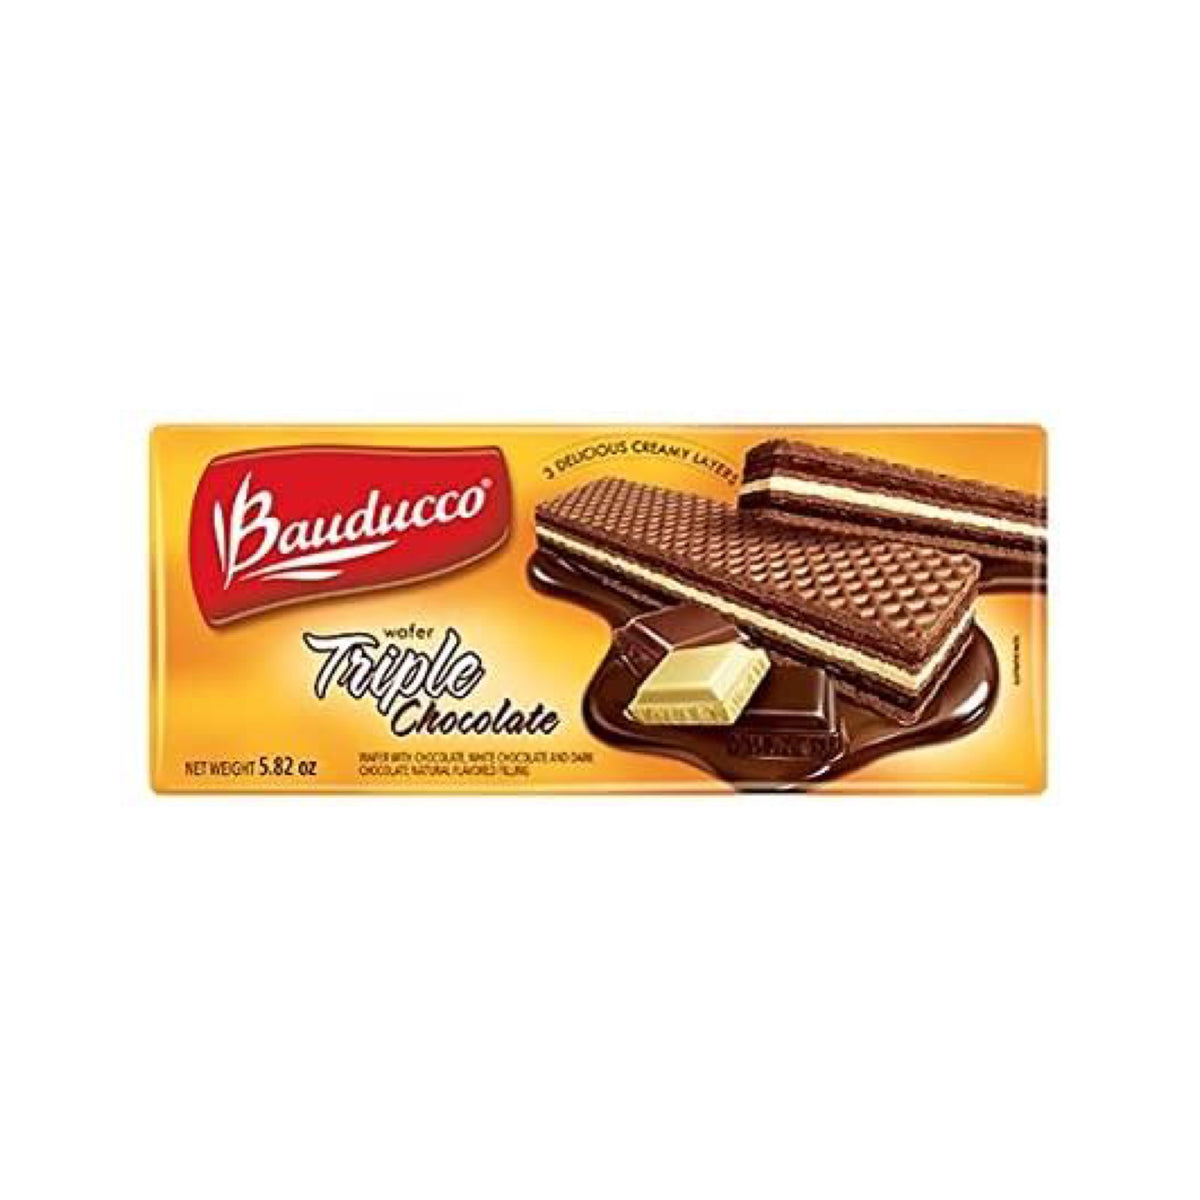 Biscoito Wafer Bauducco Chocolate 140g